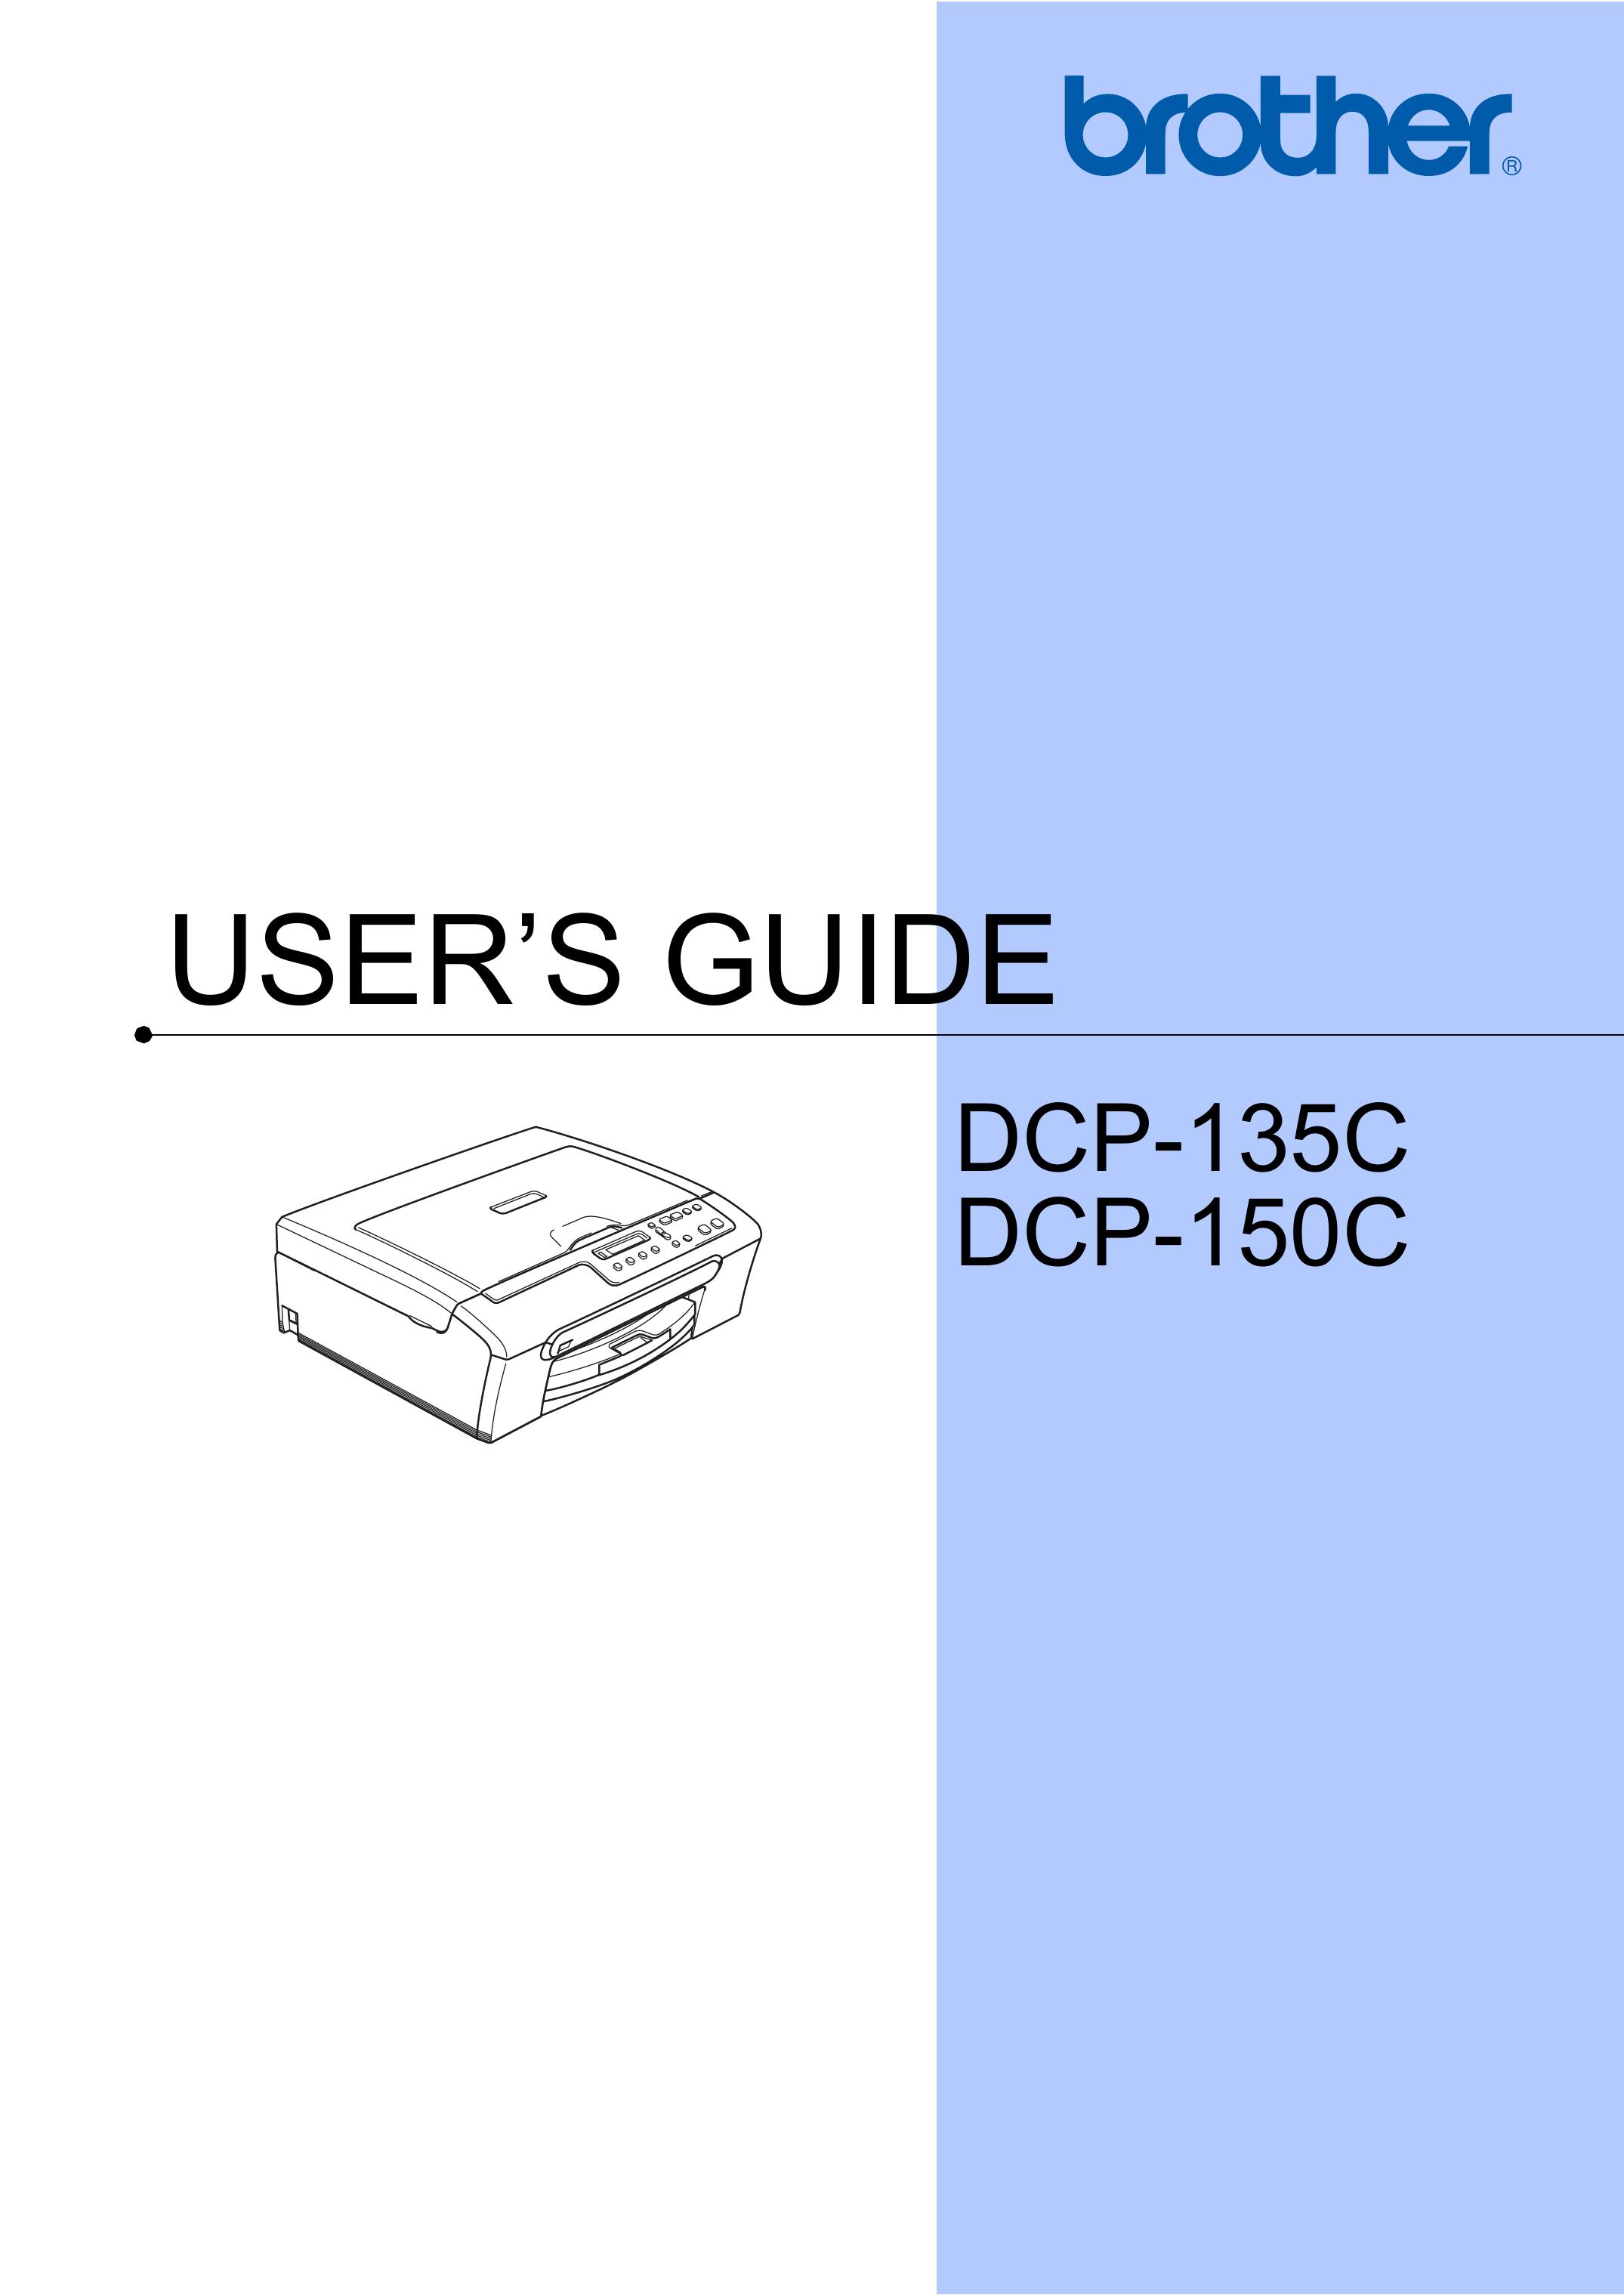 Brother DCP-135C Photo Printer User Manual